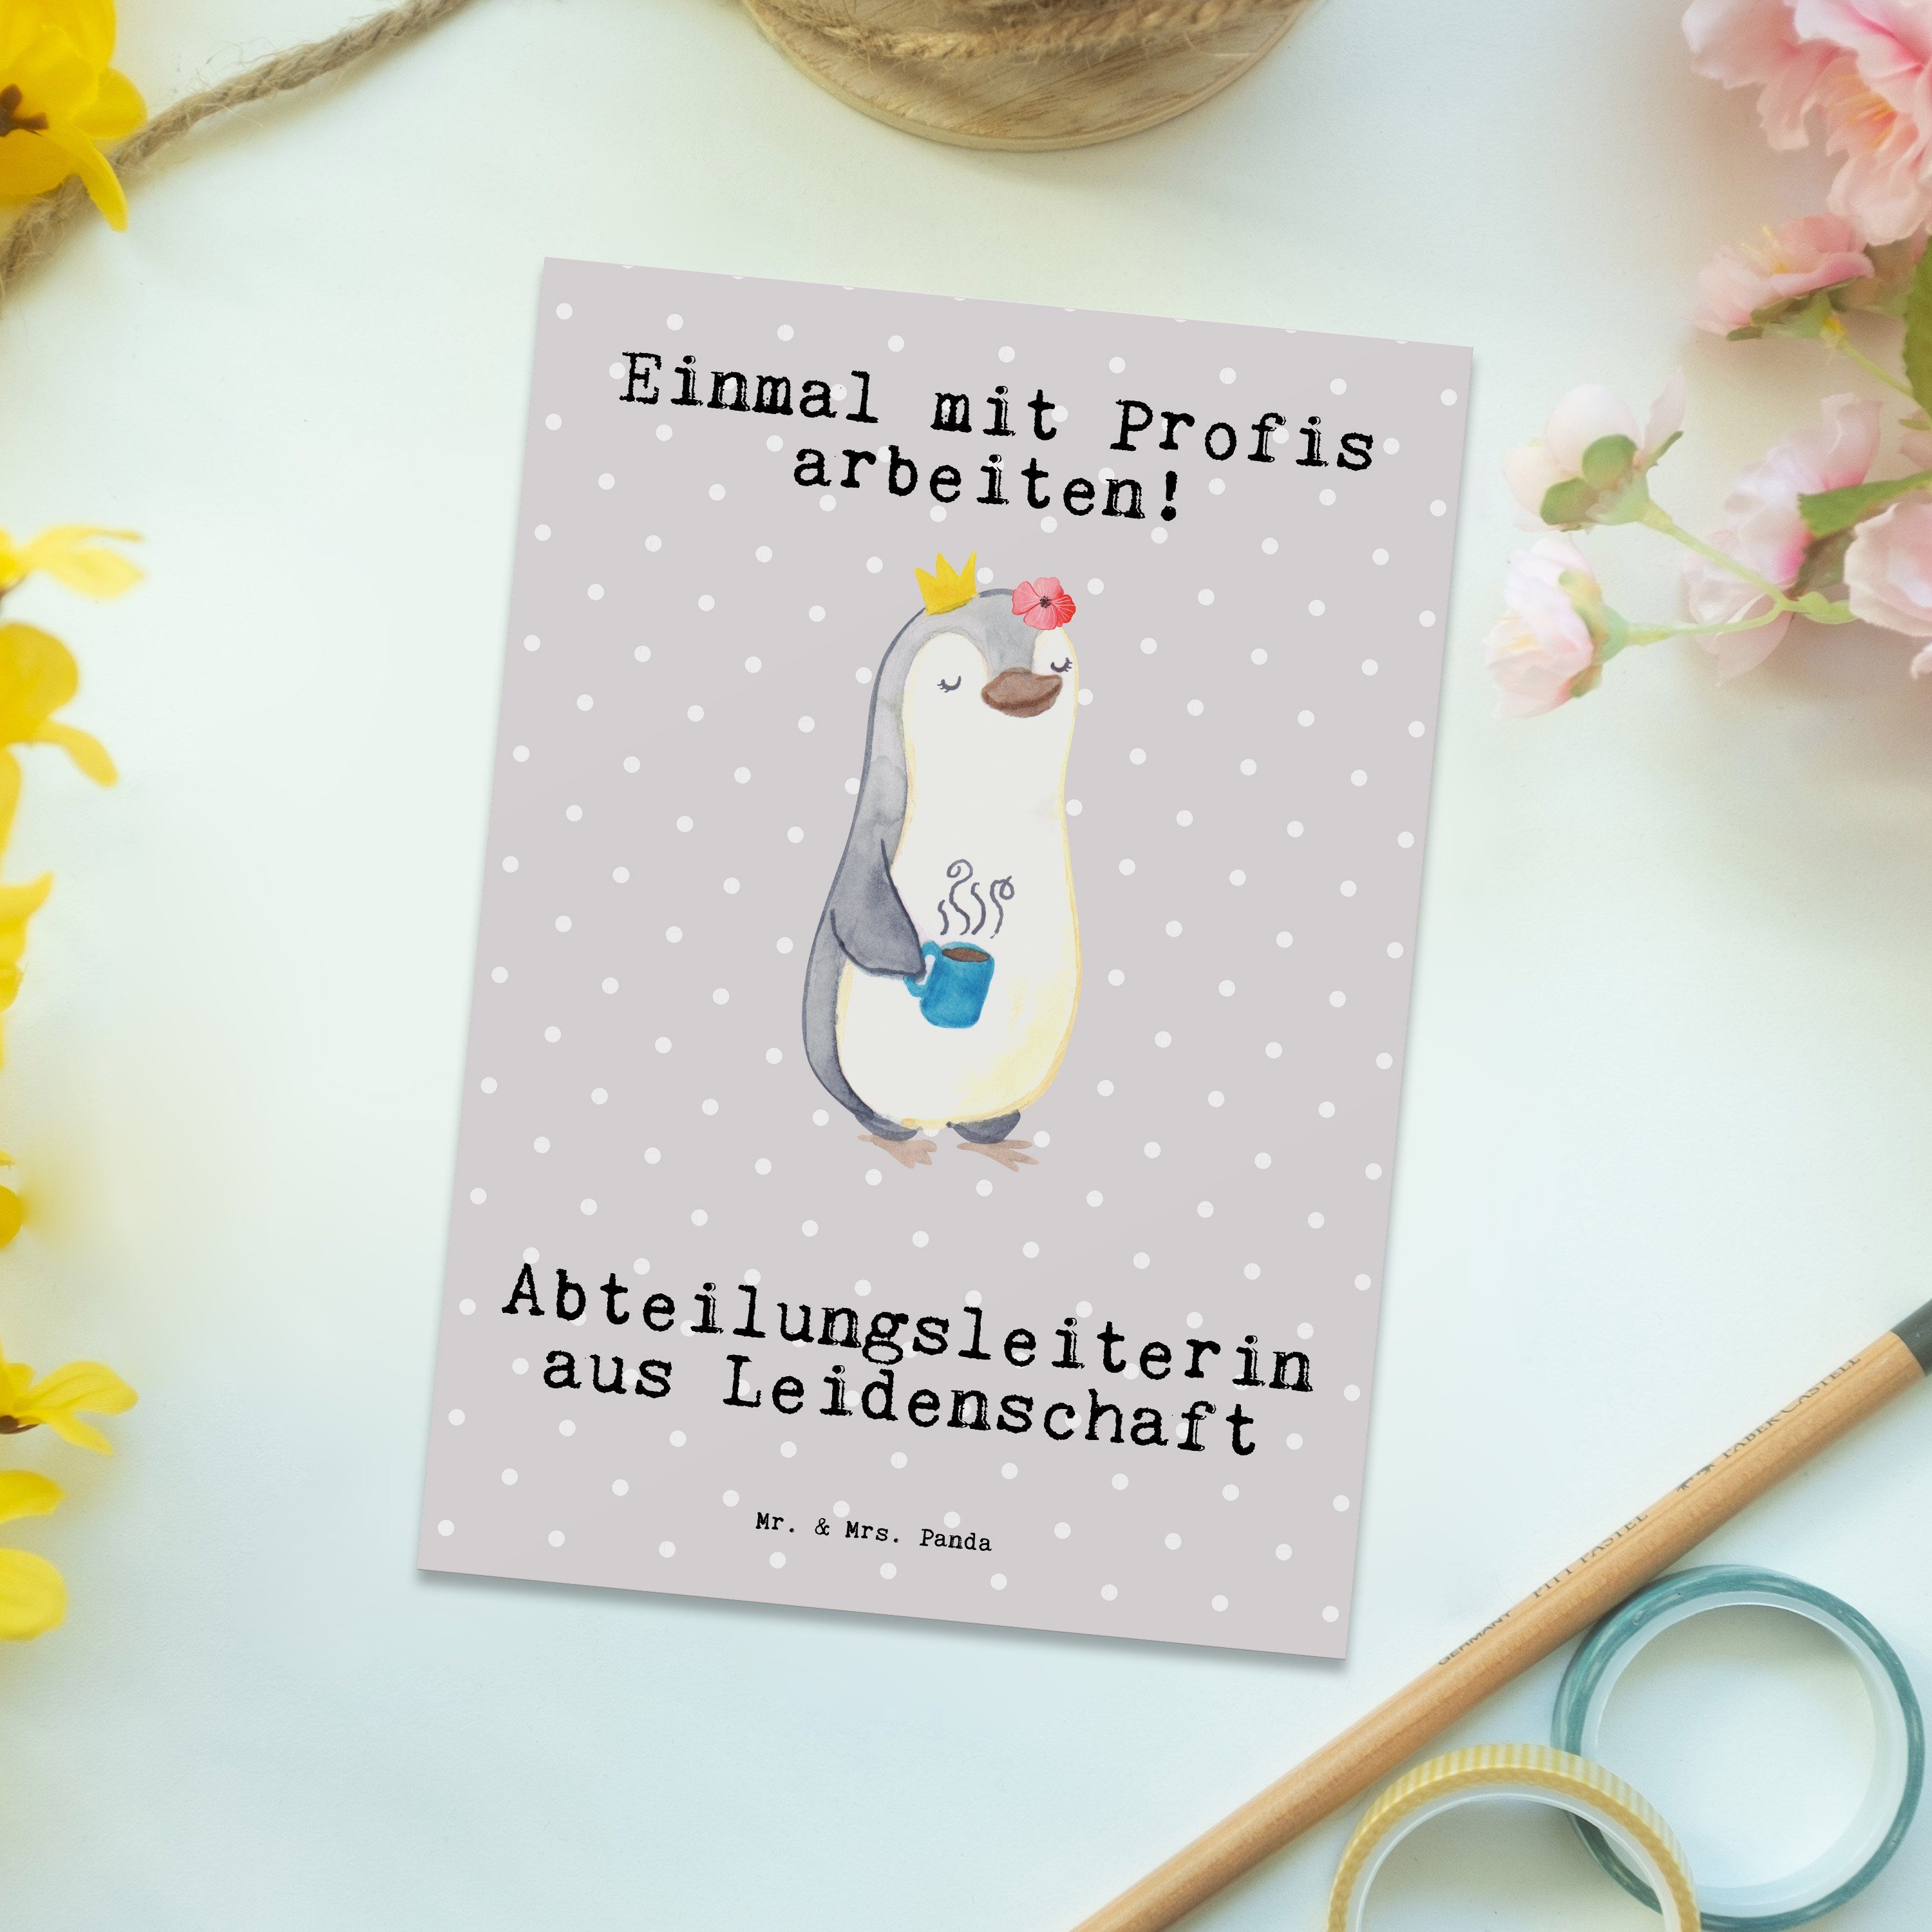 & Mrs. Abteilungsleiterin Kolleg - Leidenschaft Pastell Postkarte aus Mr. - Panda Geschenk, Grau